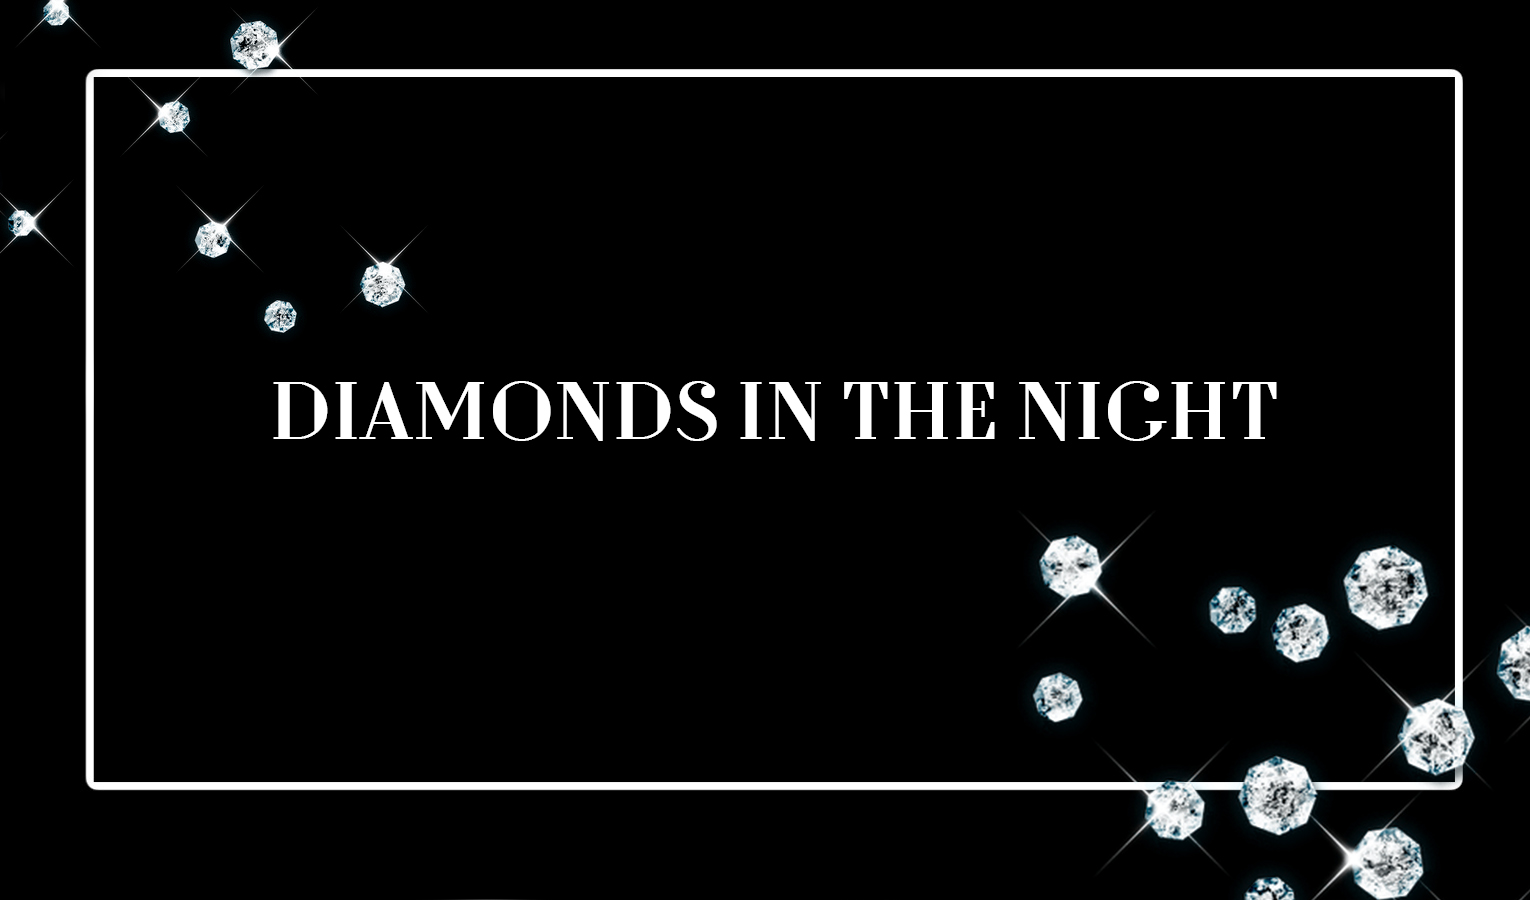 DIAMONDS IN THE NIGHT